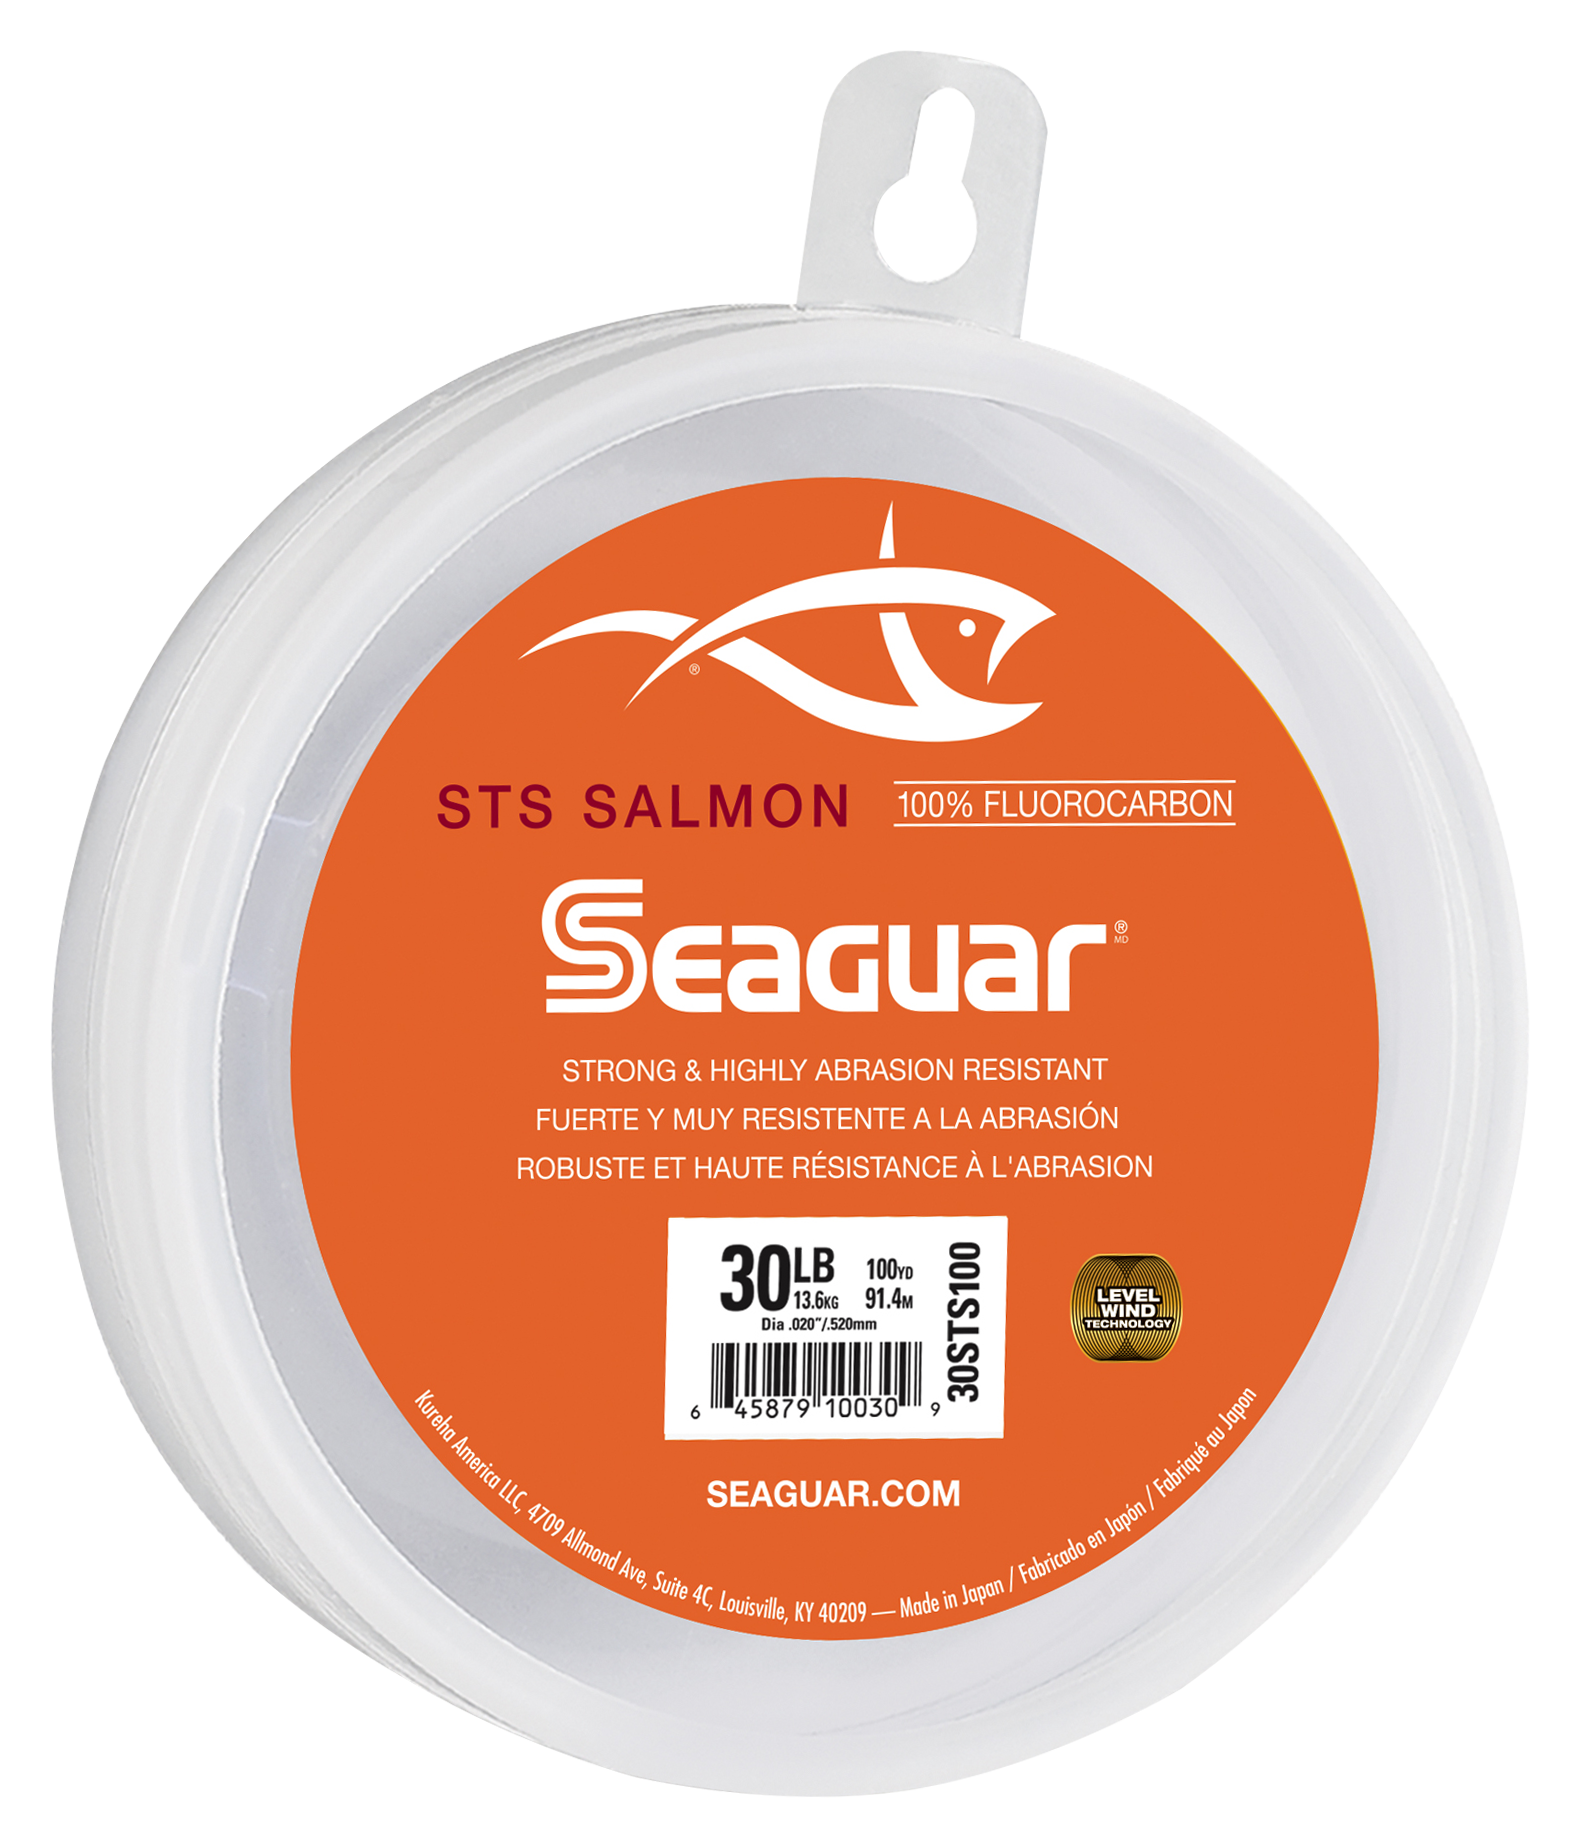 Seaguar STS 20lb Salmon